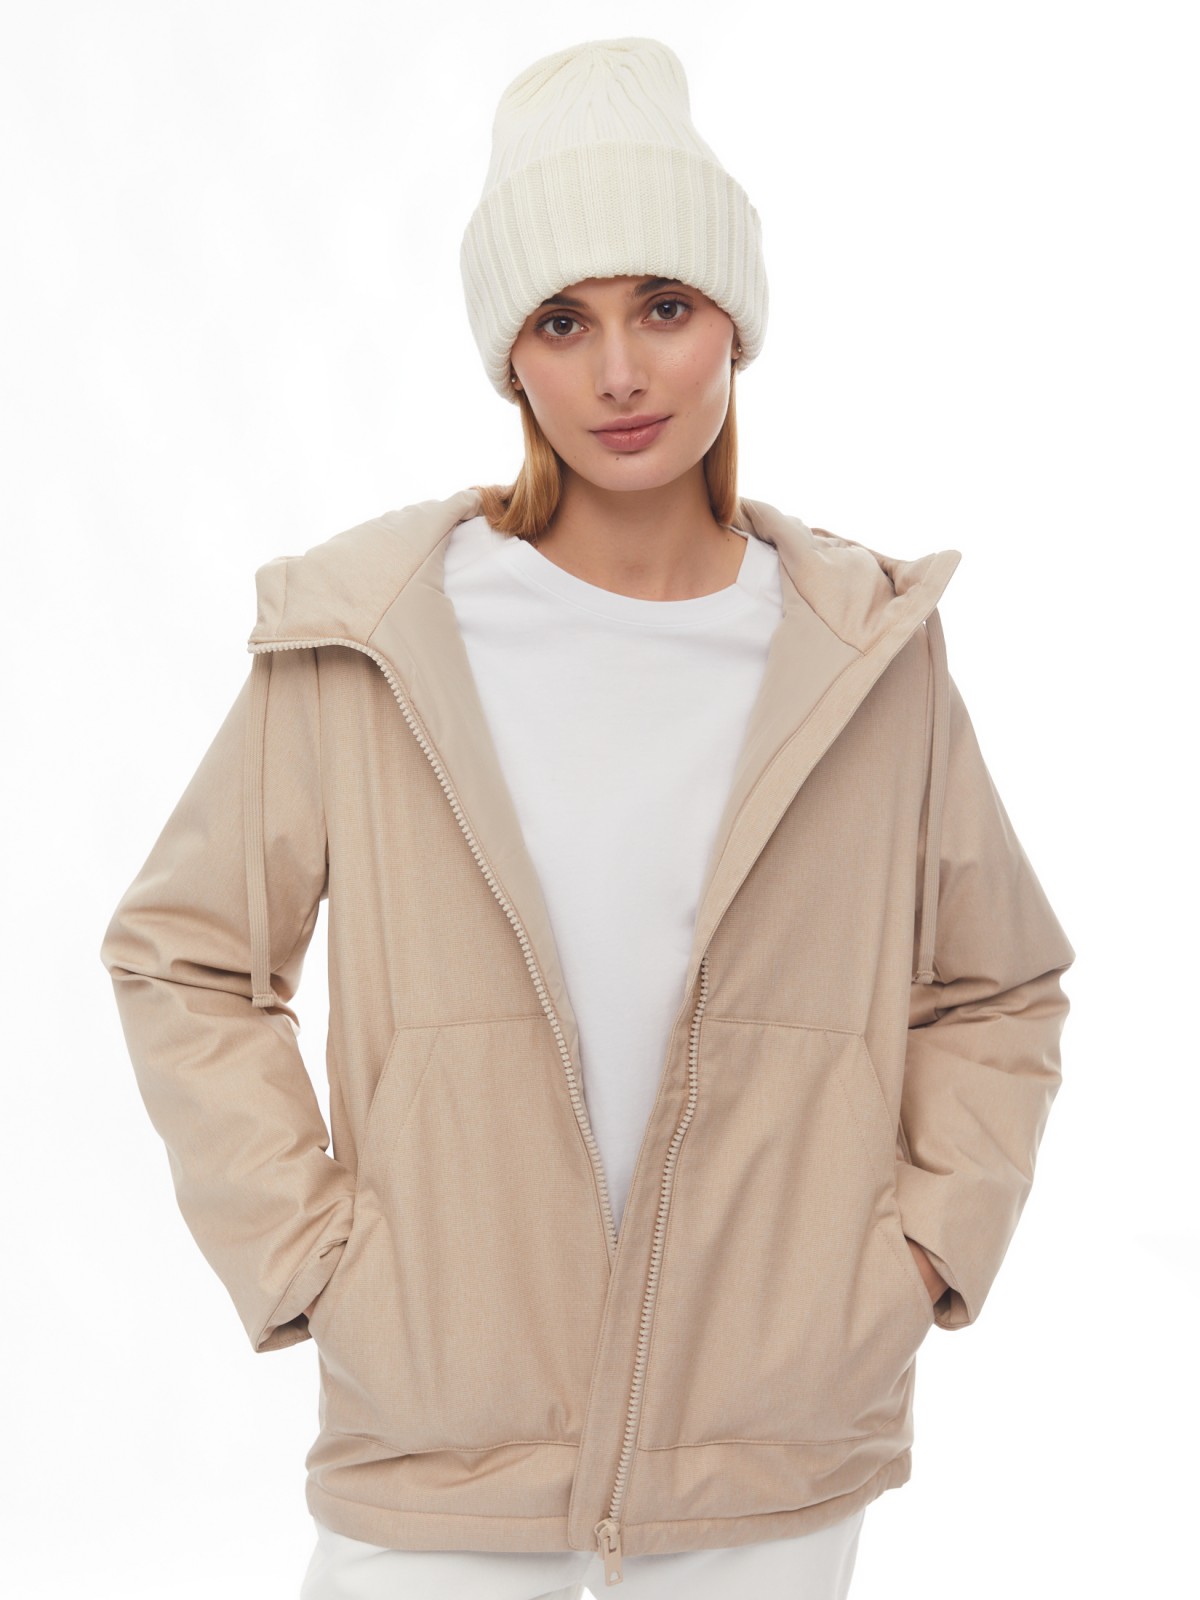 Утеплённая куртка-парка на молнии с капюшоном zolla 024125102124, цвет молоко, размер XS